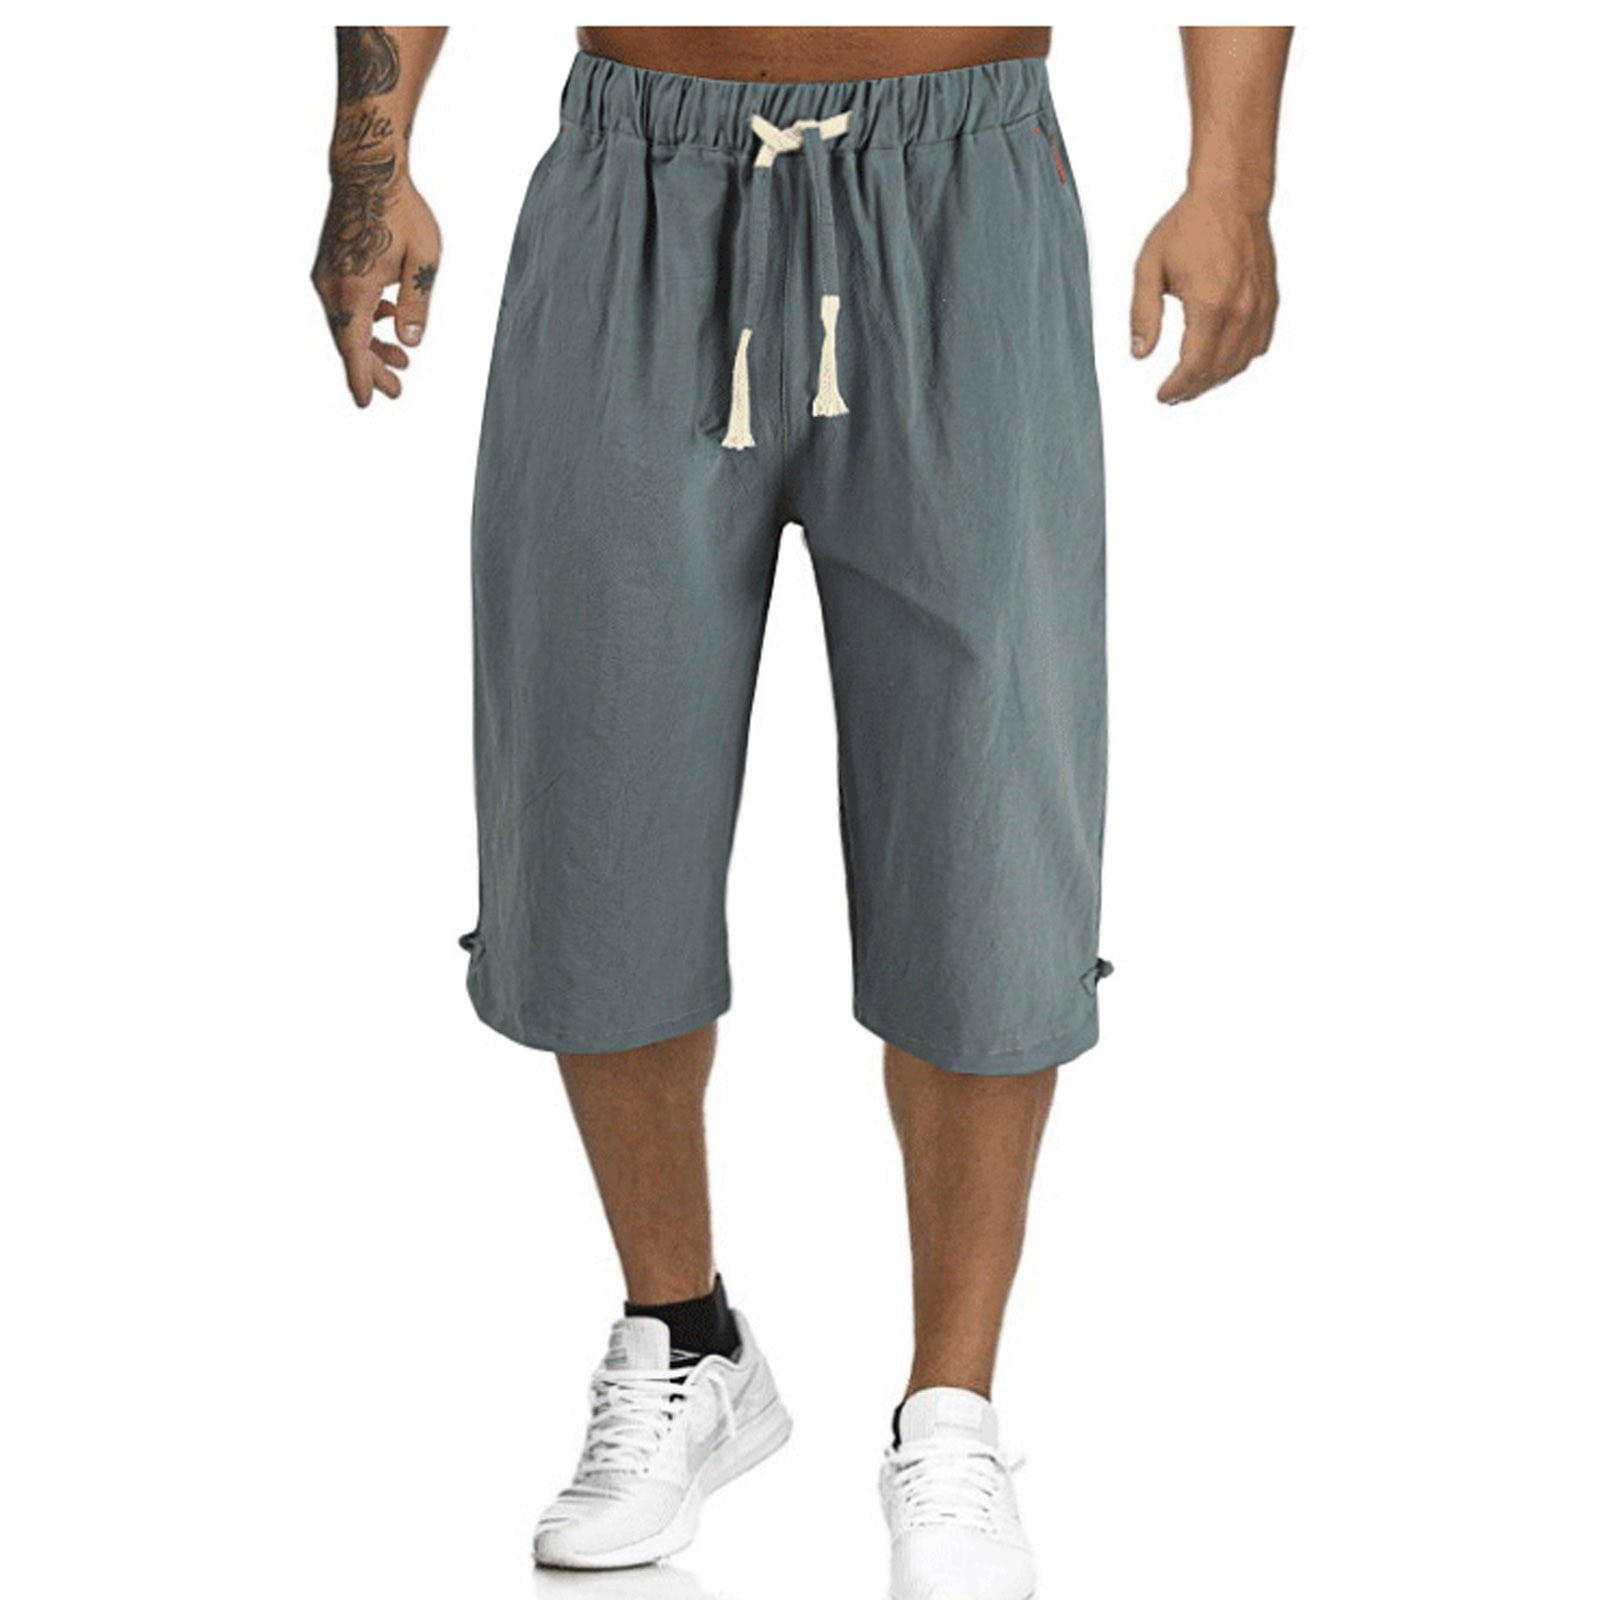 Dezsed Mens Capri Long Shorts Clearance Men Casual Fashion Drawstring ...